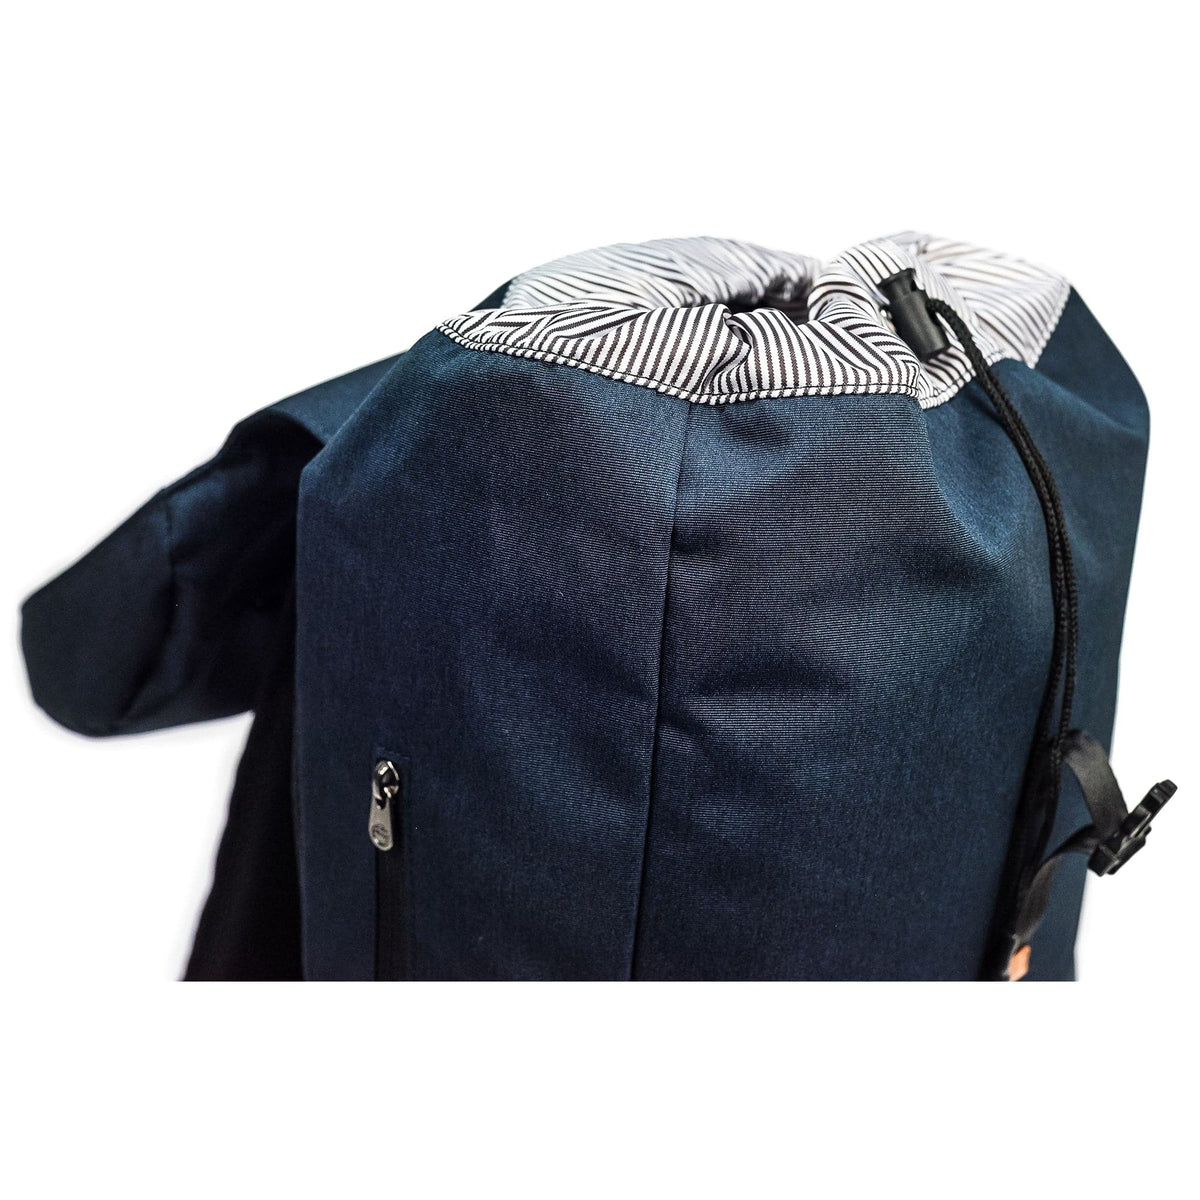 PKG Cambridge 15" Laptop Backpack